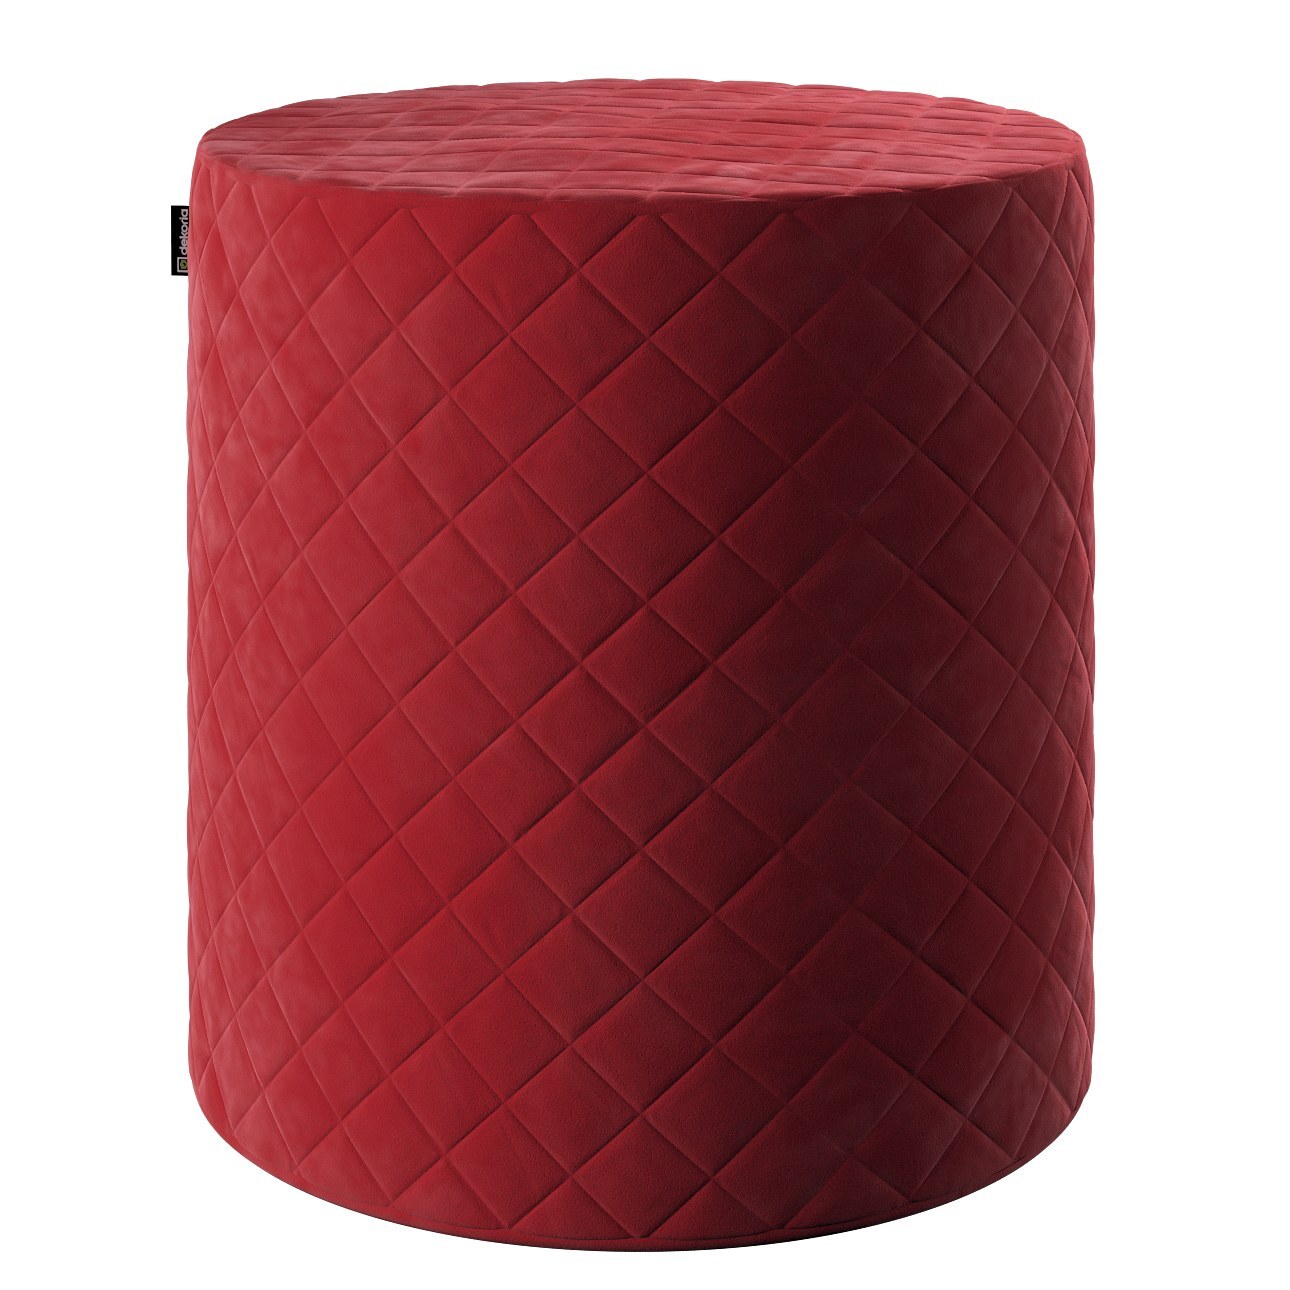 Pouf Barrel gesteppt, rot, ø 40 x 40 cm, Velvet (704-15) günstig online kaufen